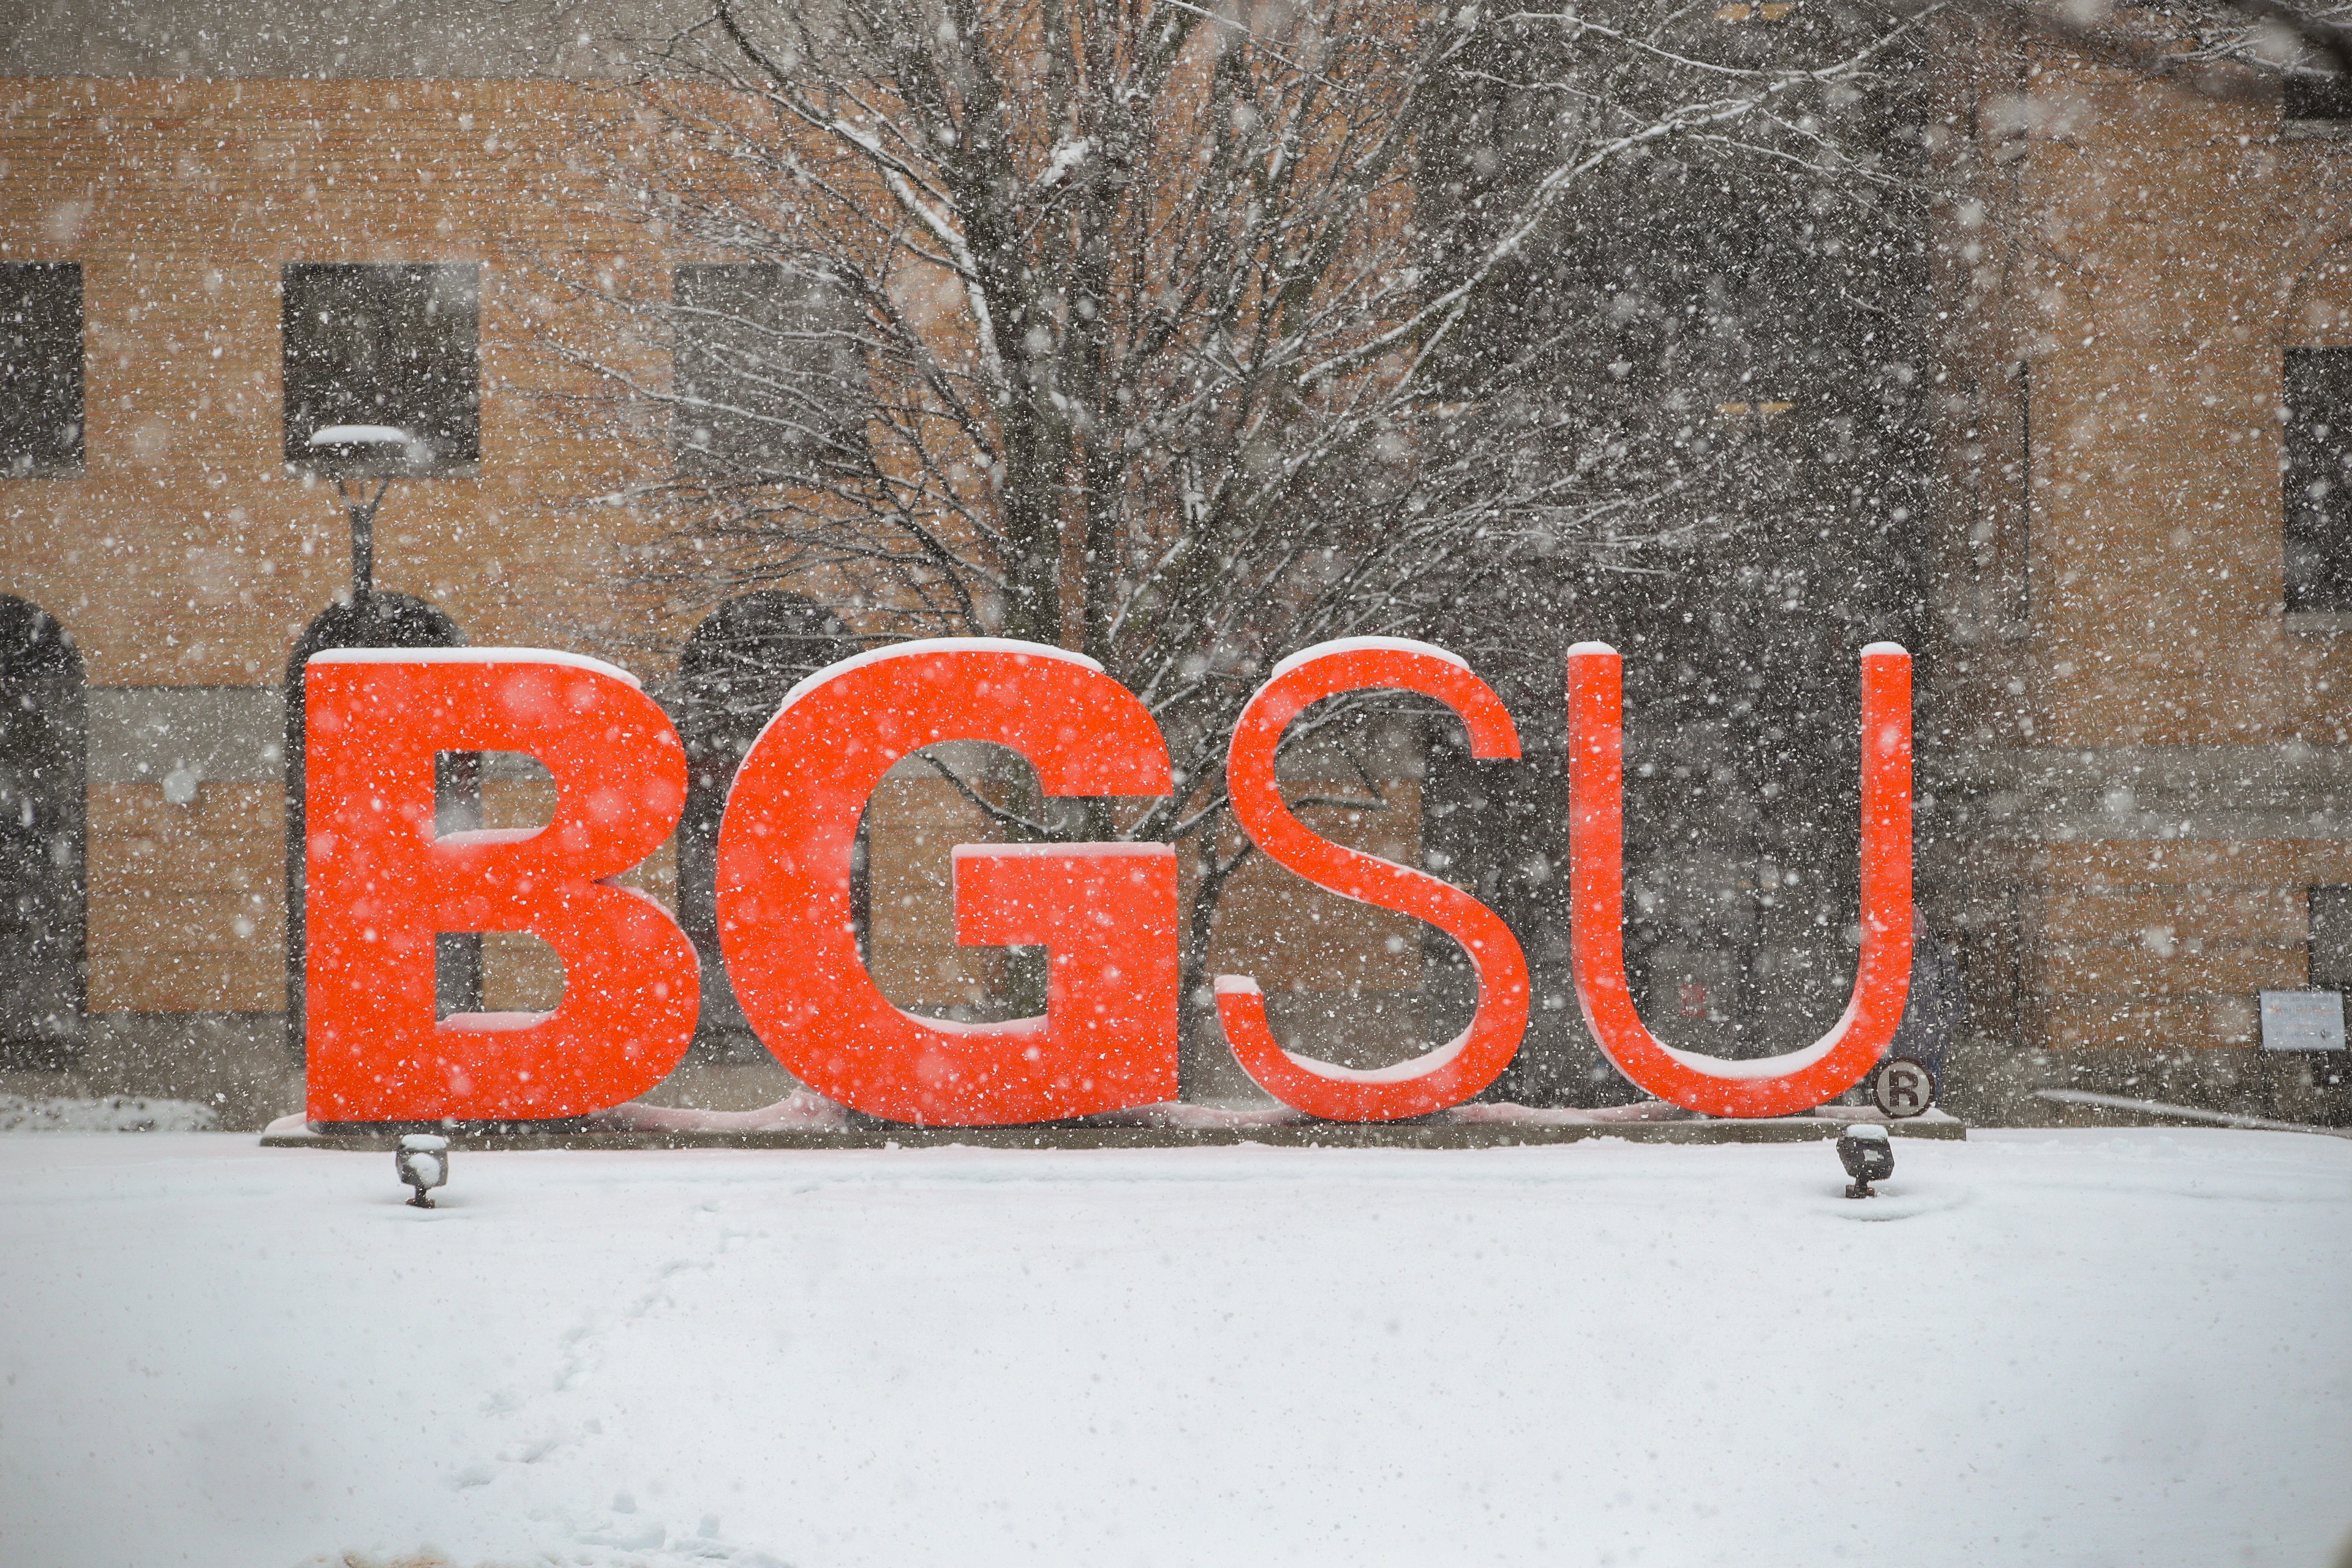 BGSU campus letters